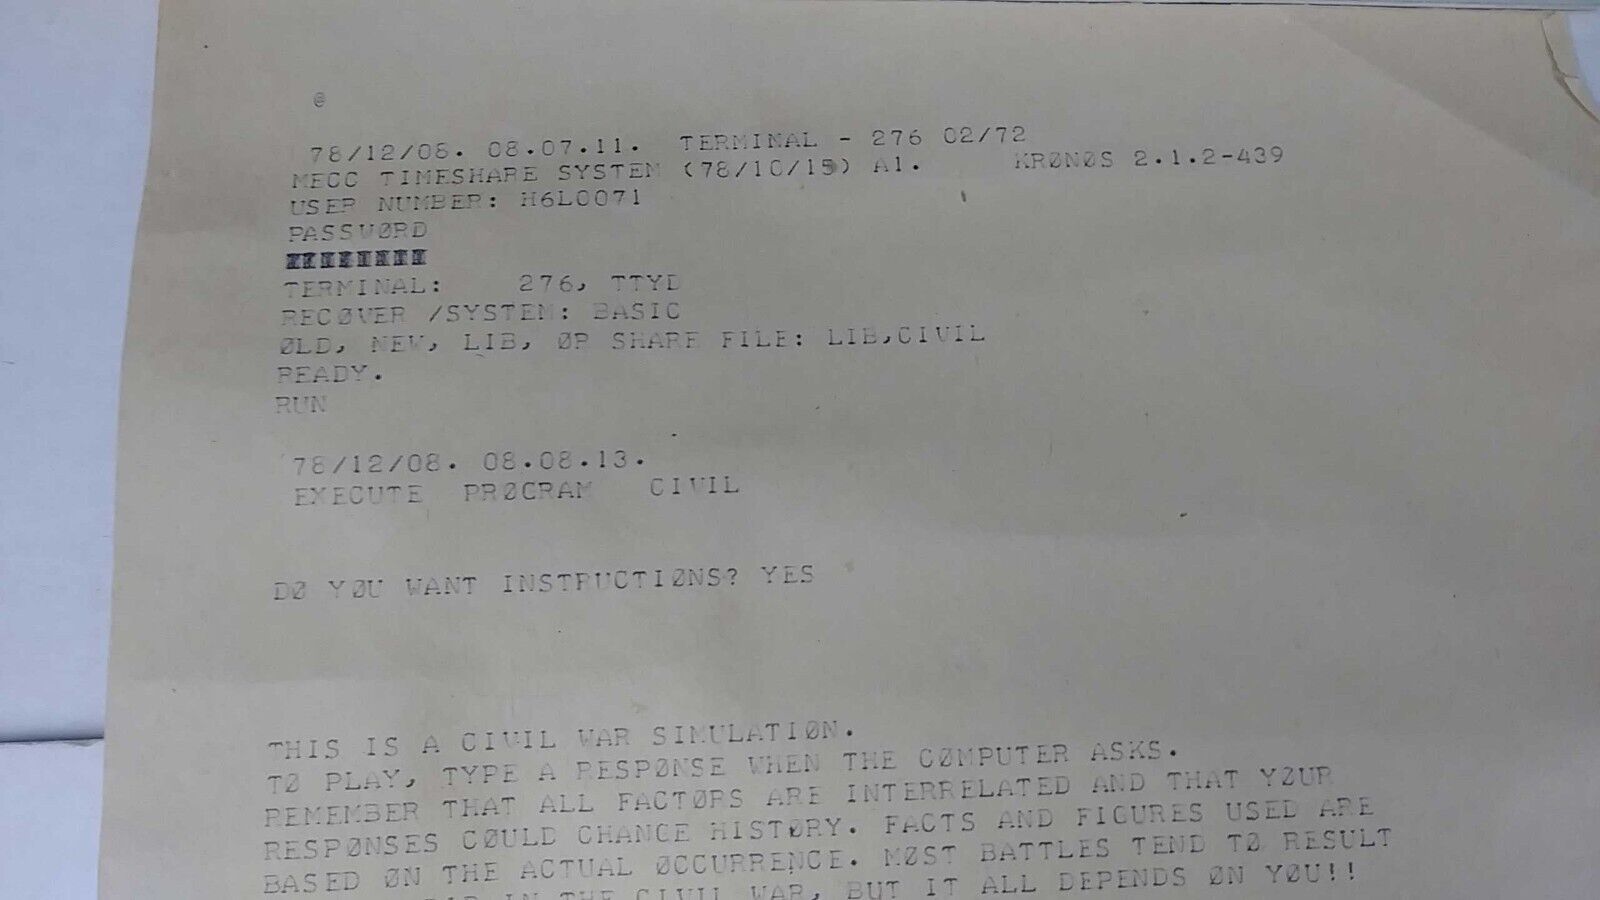 1978 MECC Civil War Sim Teletype Print Out, Control Data Corporation Cyber 73